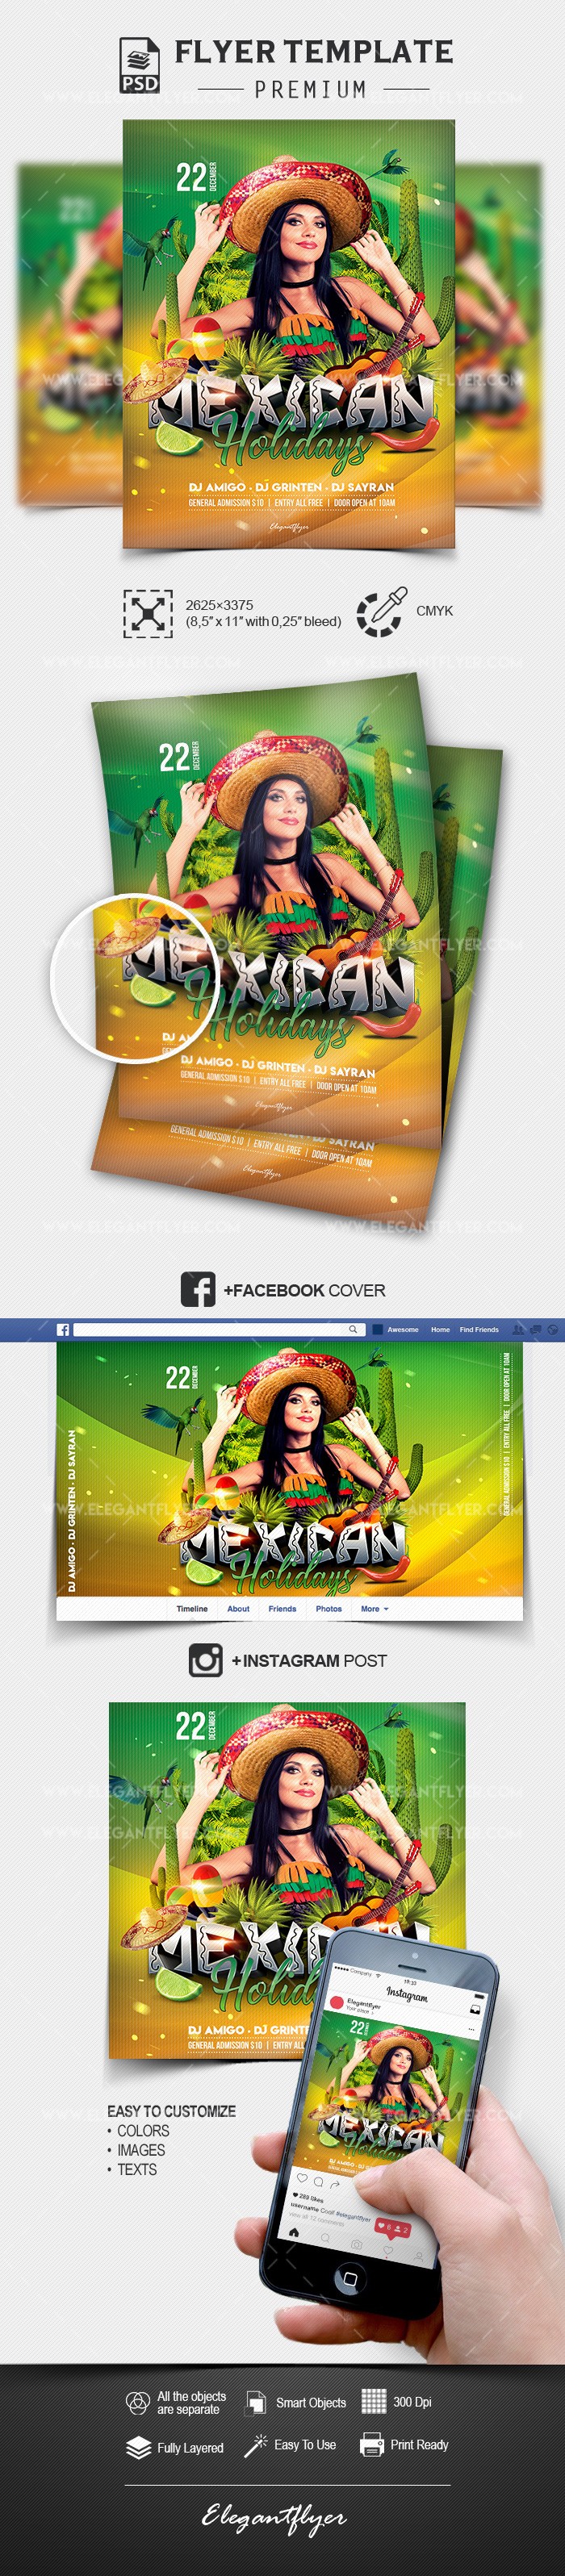 Mexican Holidays by ElegantFlyer